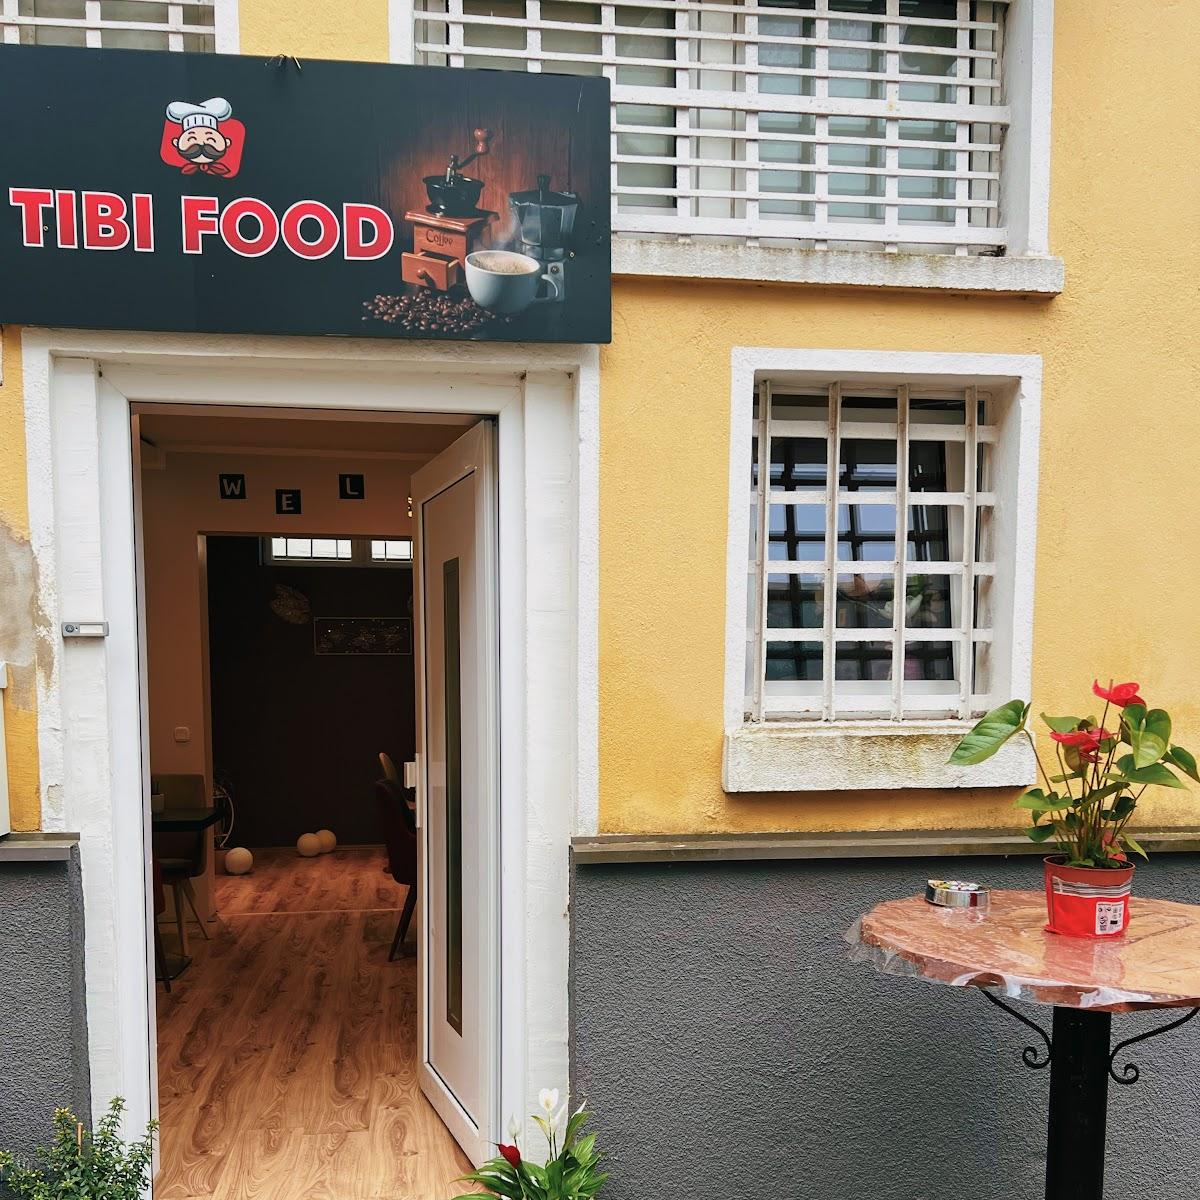 Restaurant "TIBI FOOD" in Recklinghausen